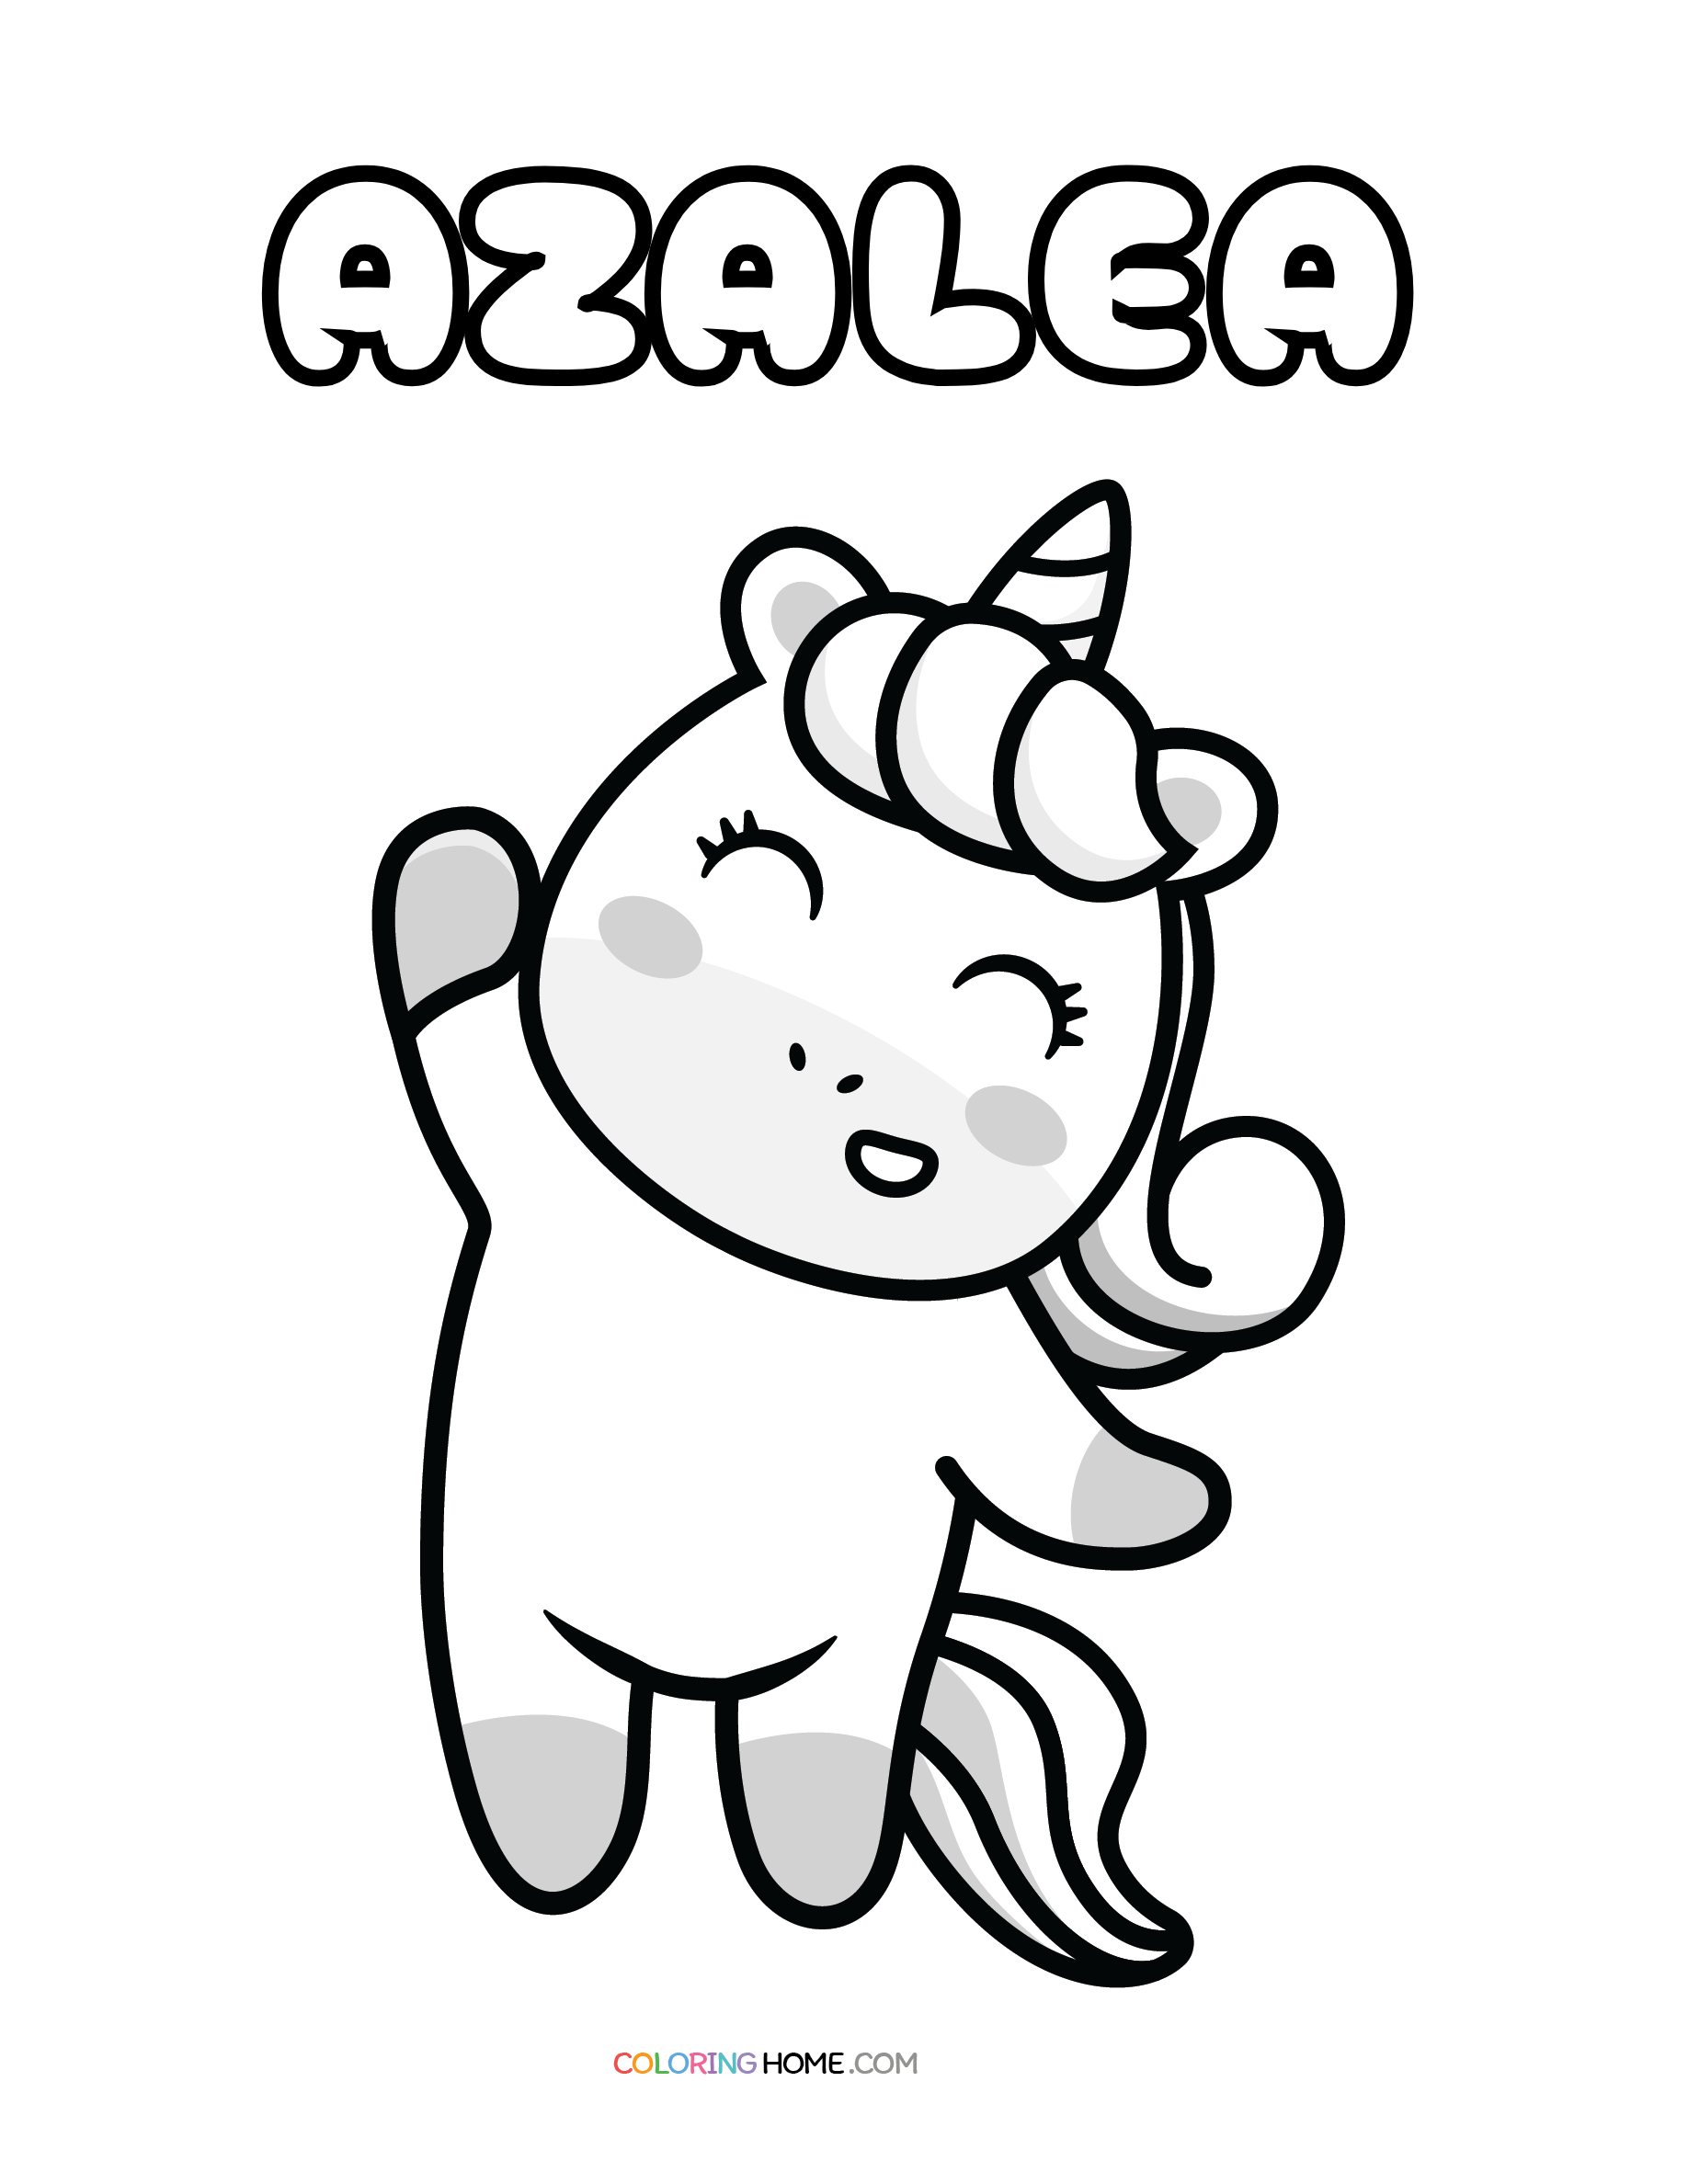 Azalea unicorn coloring page